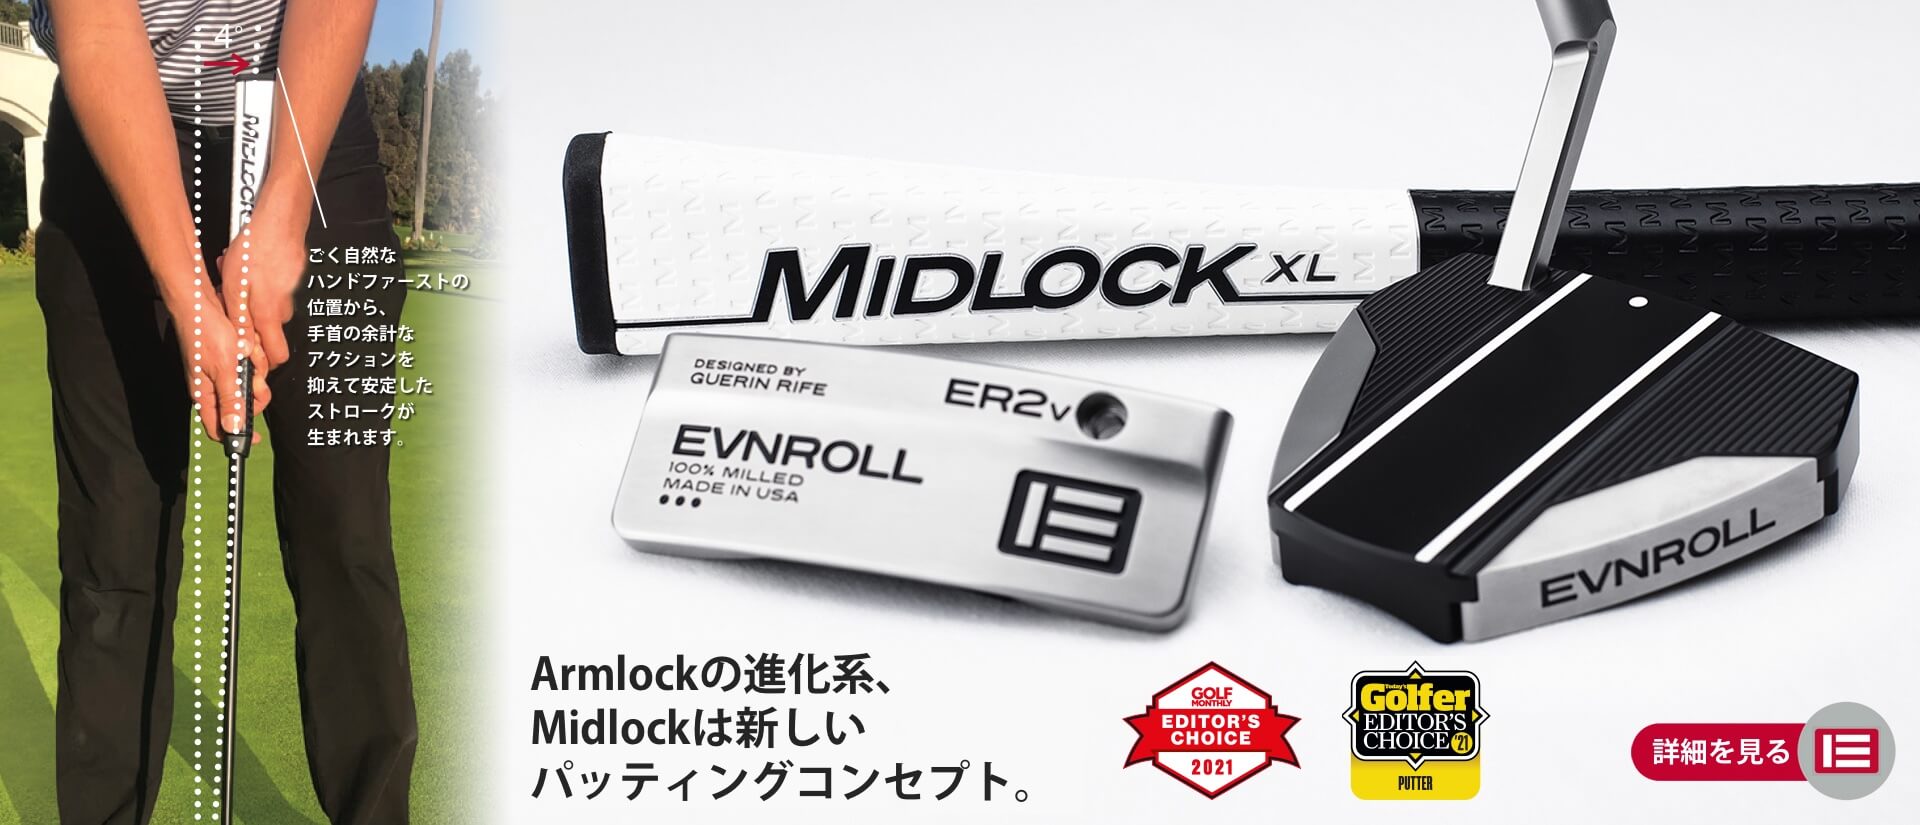 midlock/index.html